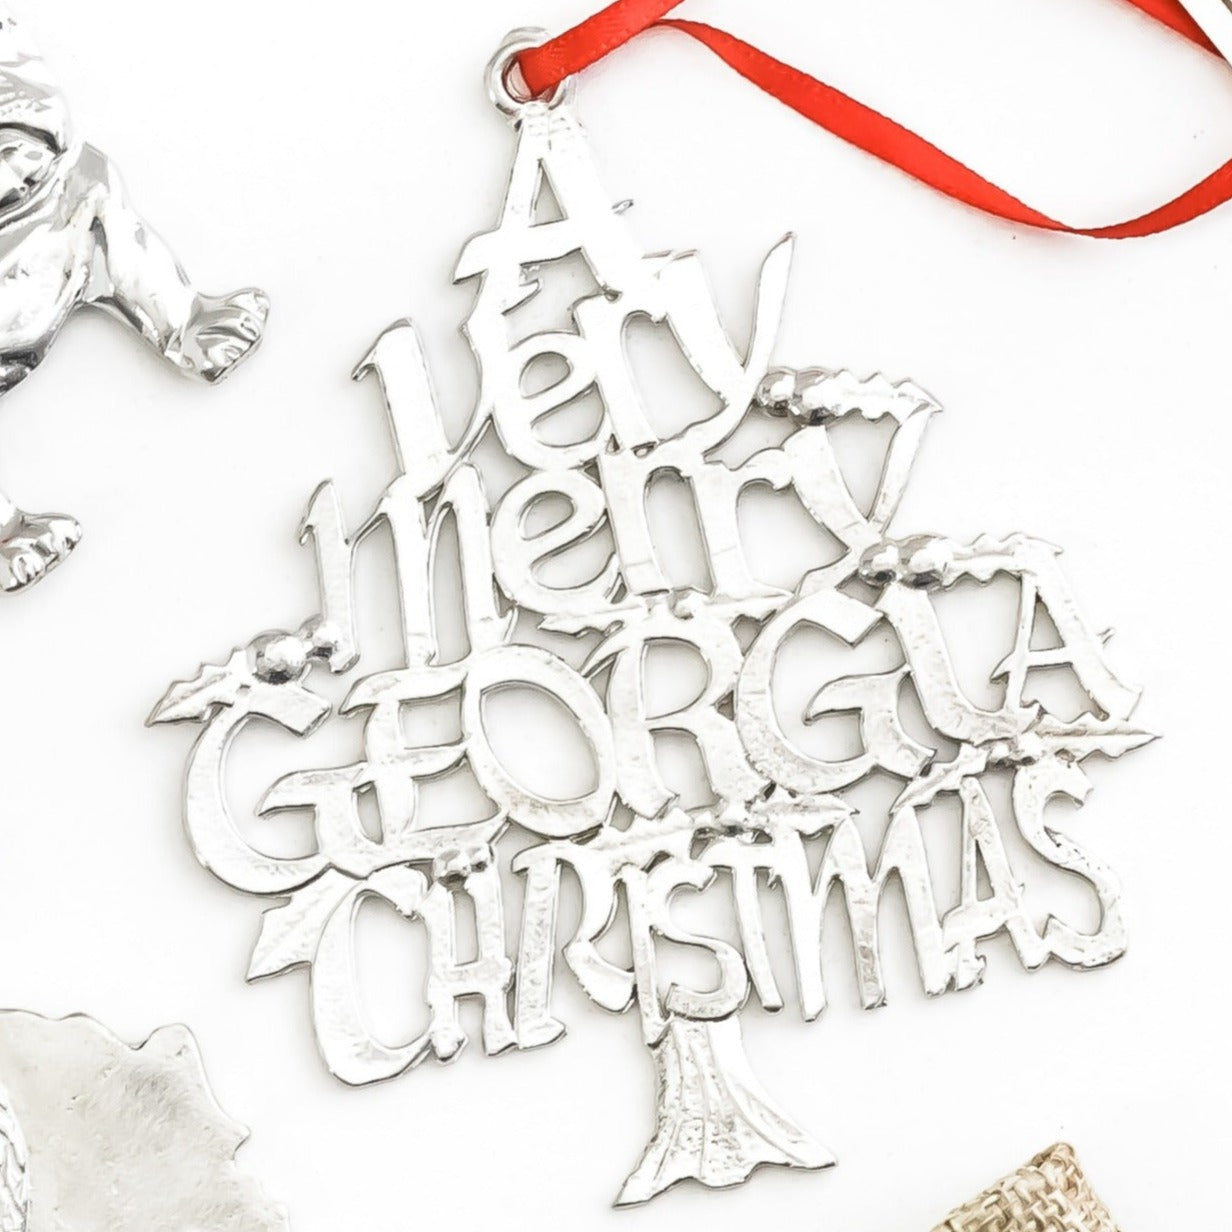 Georgia Gift - A Very Merry Georgia Christmas Ornament